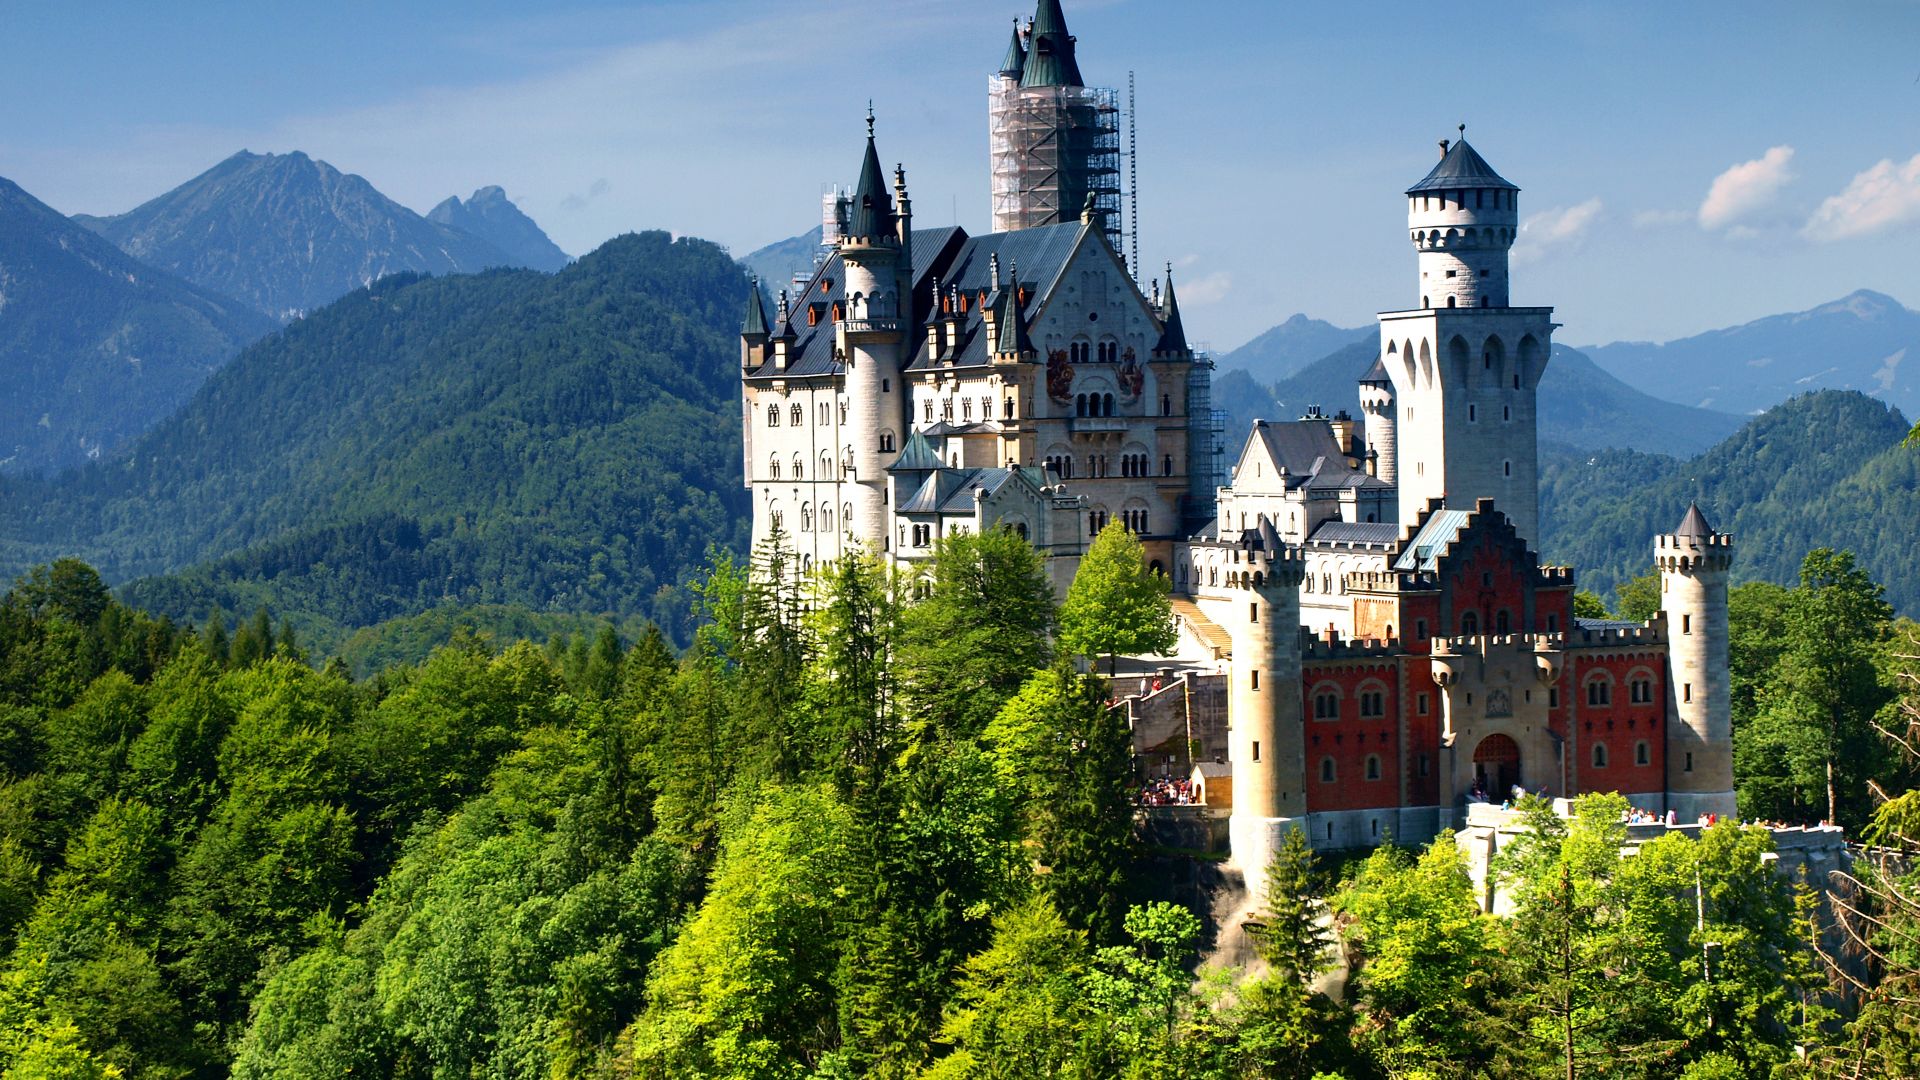 Neuschwanstein Castle, Bavaria, Germany, Alps, mountain, castle, travel, tourism (horizontal)